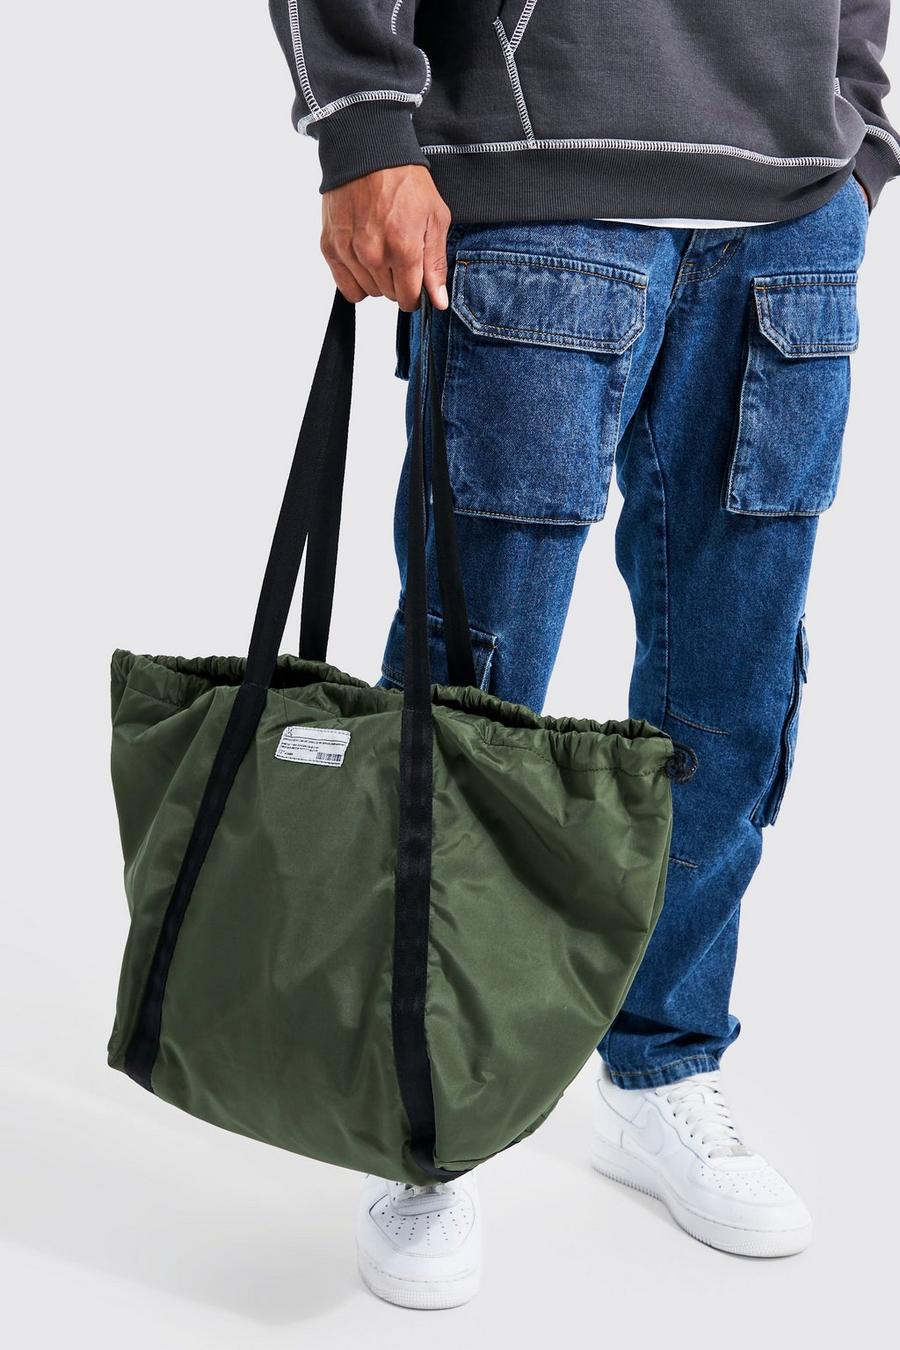 Khaki kaki Adjustable Nylon Tote Bag